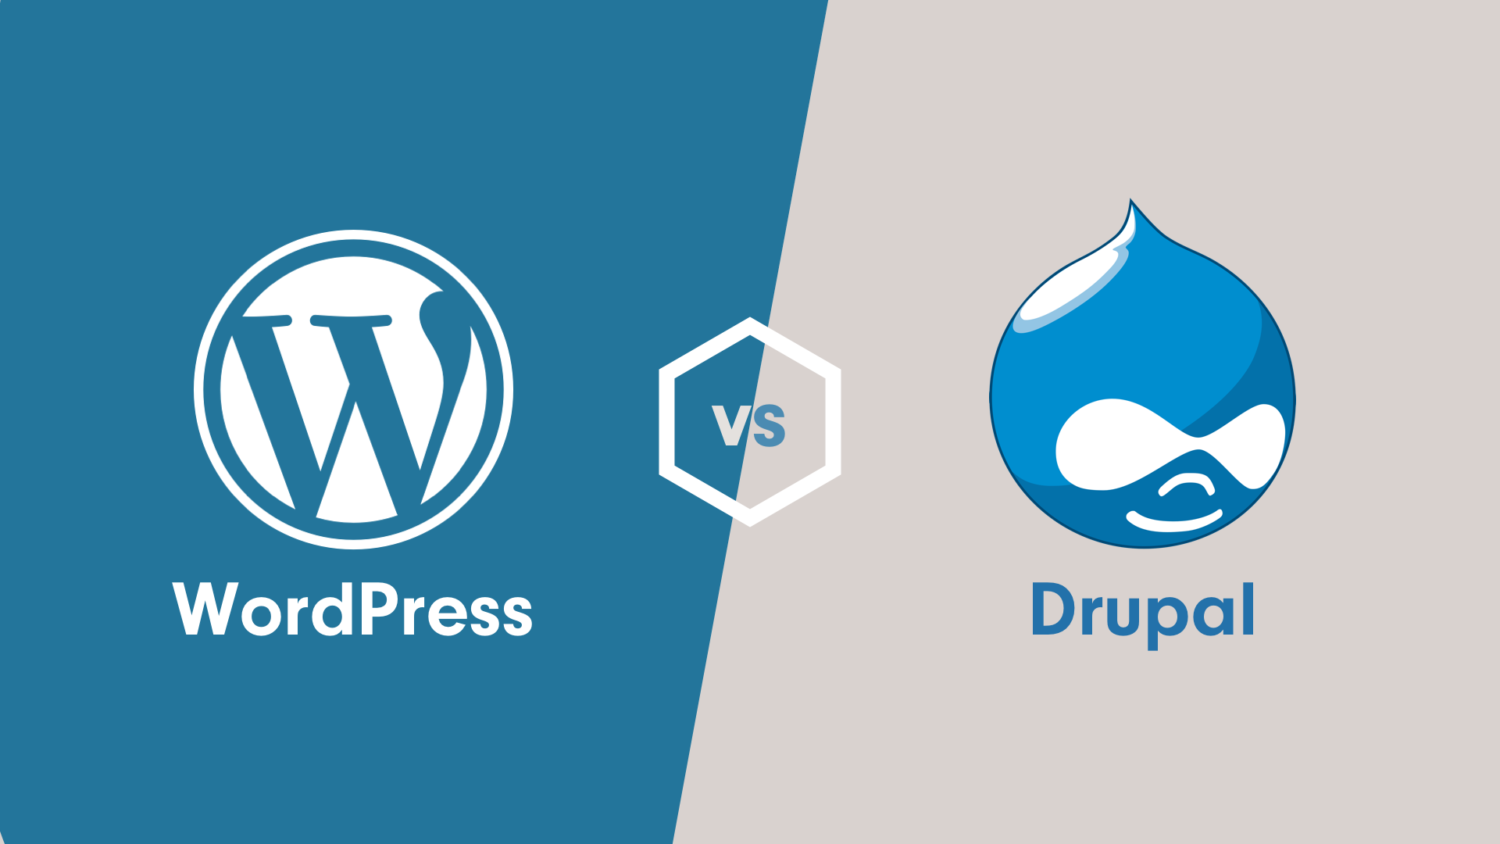 drupal vs wordpress 2020